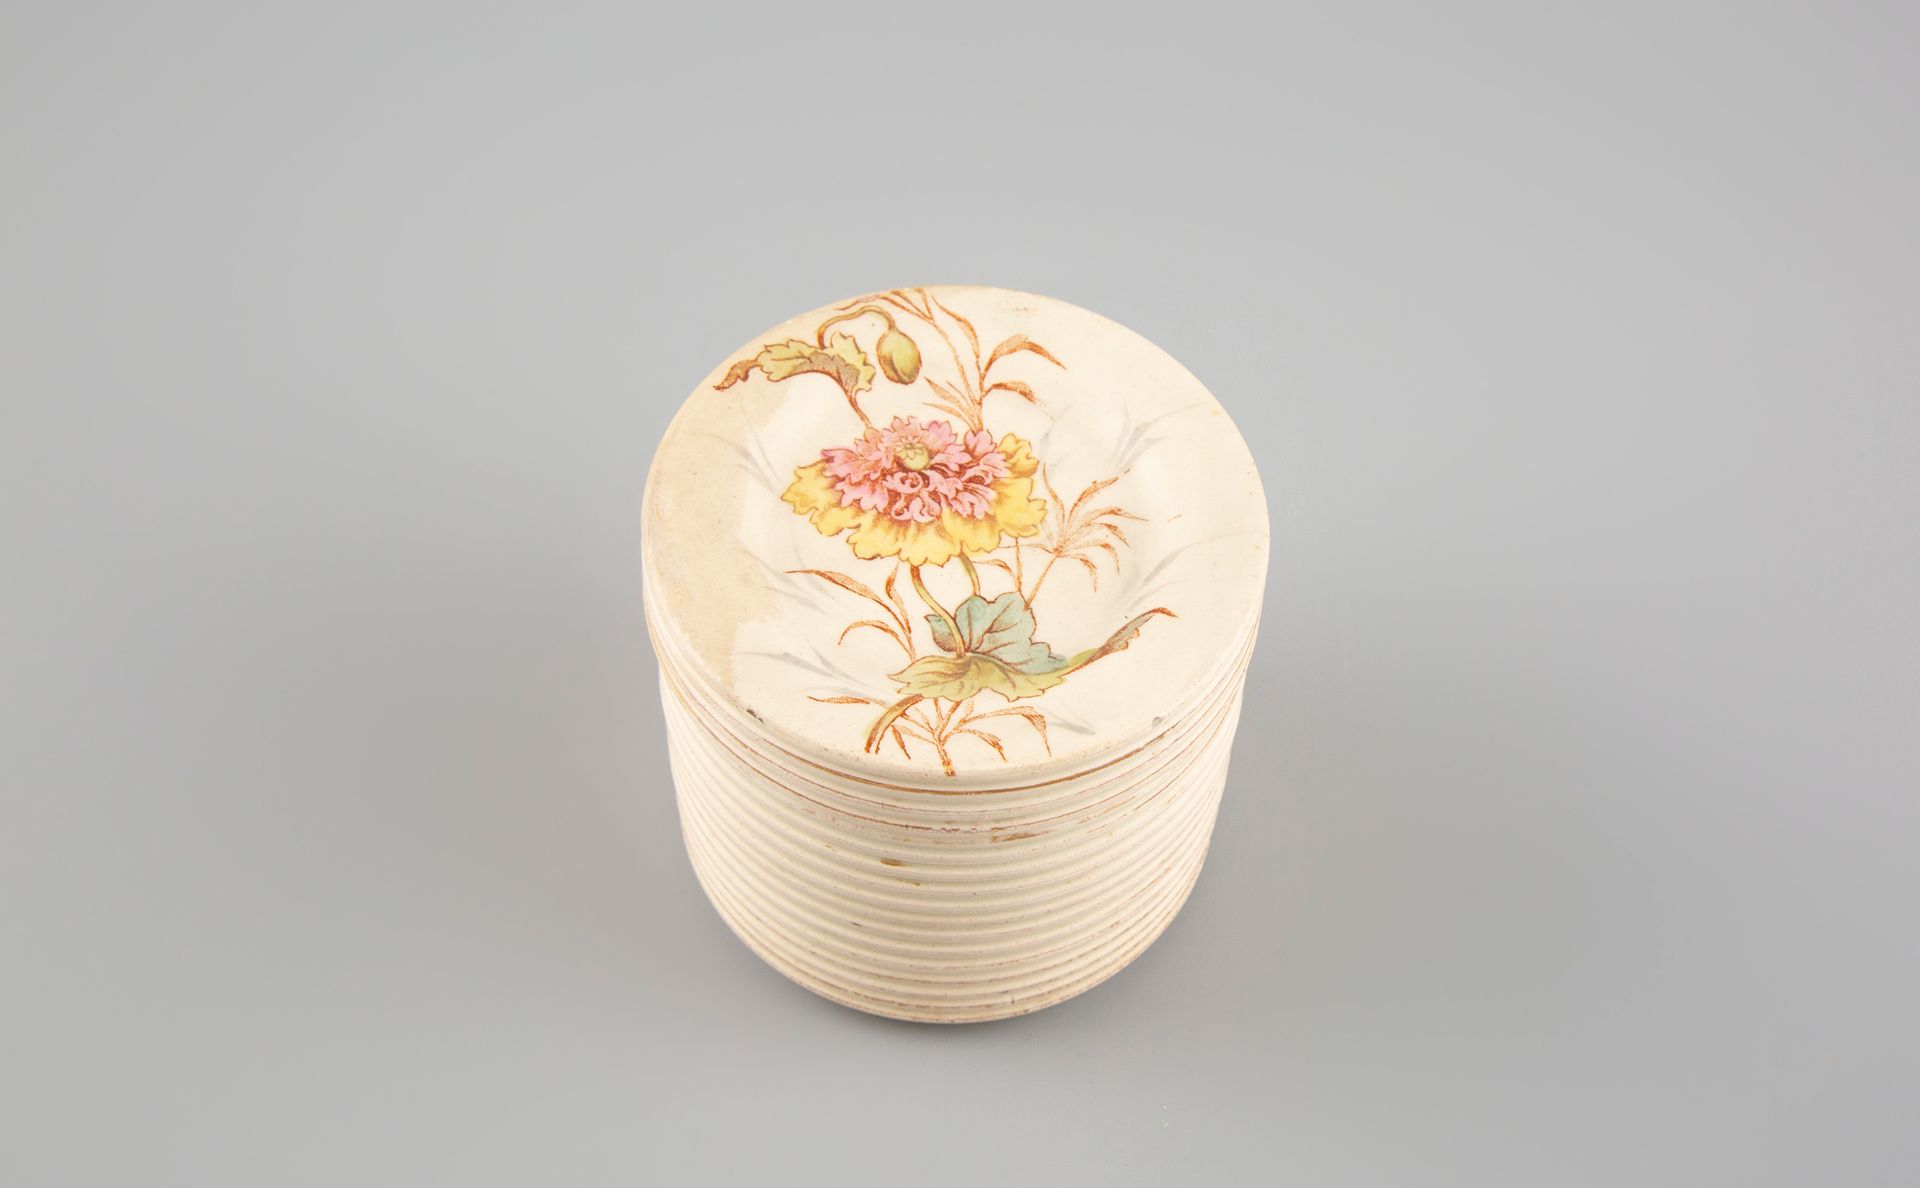 Null 巴黎，乔治-德雷福斯版，稀有的盘子形状的盒子，开花的罂粟花

精美的陶器。尺寸：7.5 x 8.5厘米